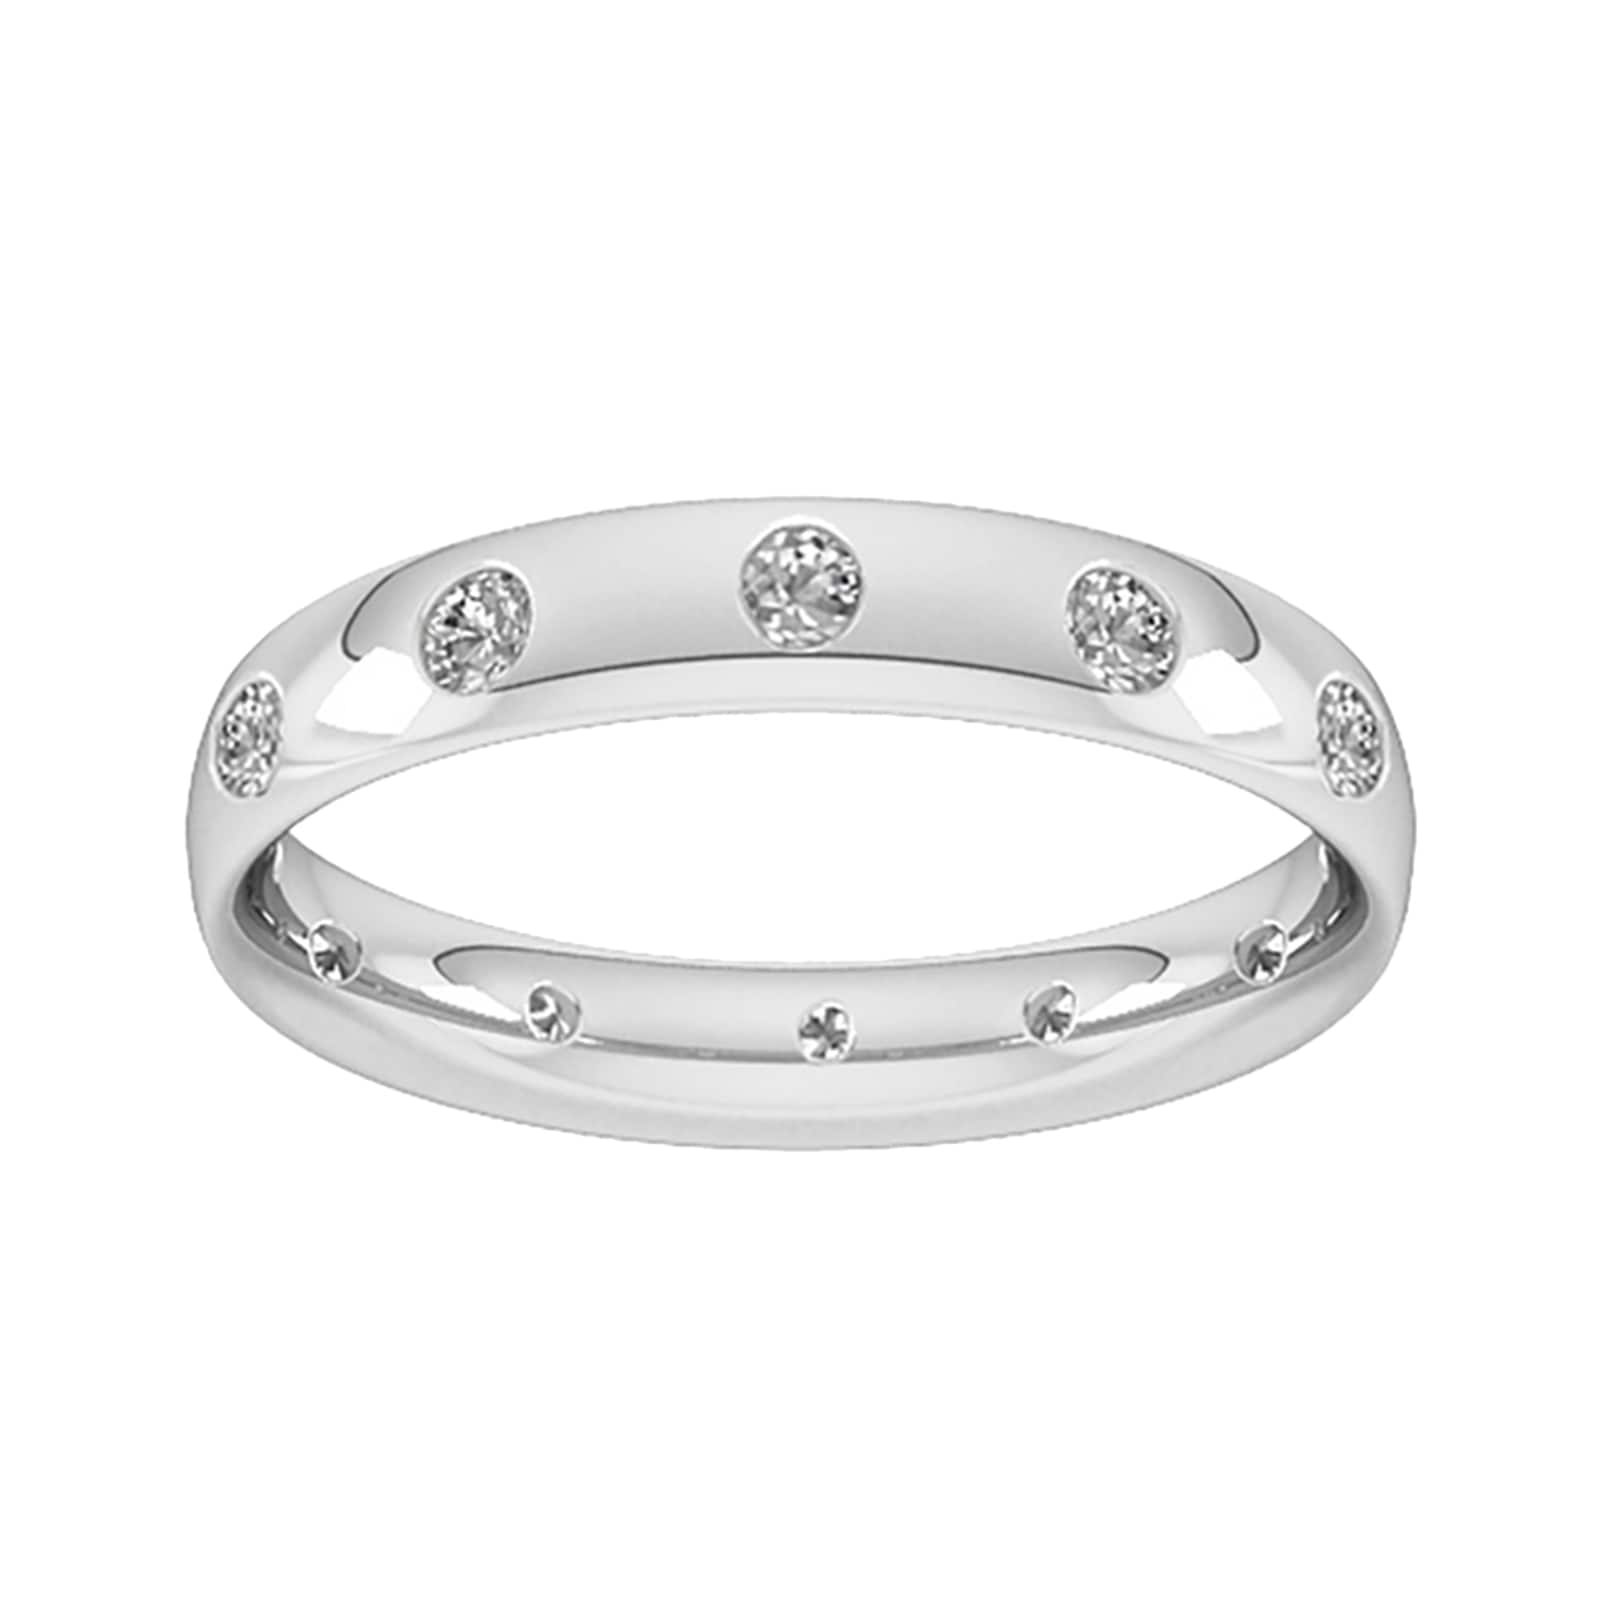 3mm 0.33 Carat Total Weight Twelve Stone Brilliant Cut Rub Over Diamond Set Wedding Ring In Platinum - Ring Size S